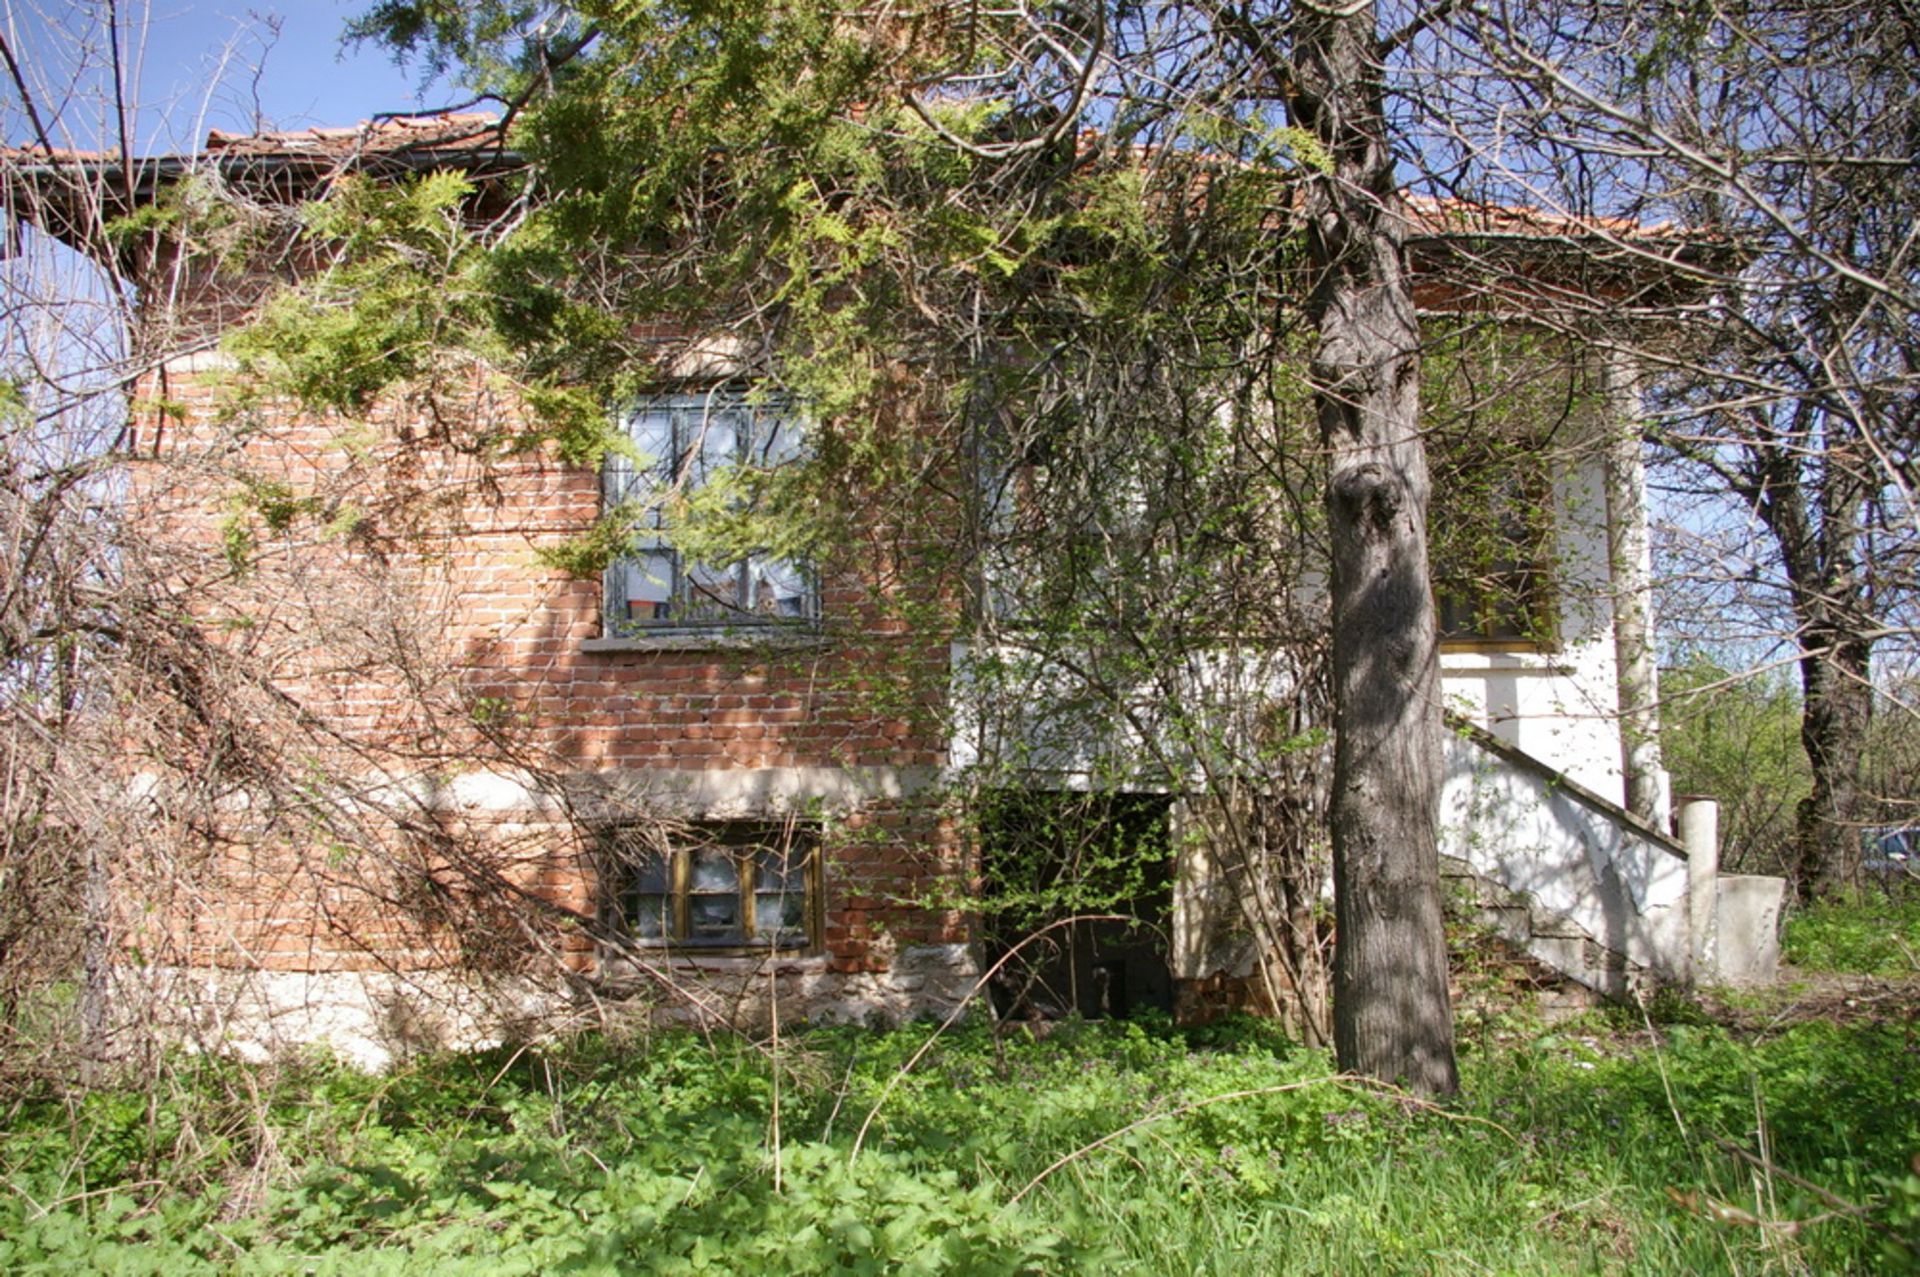 Property in Lagoshevtsi, Vidin region, Bulgaria, with 1.26 Acre land - Image 2 of 17